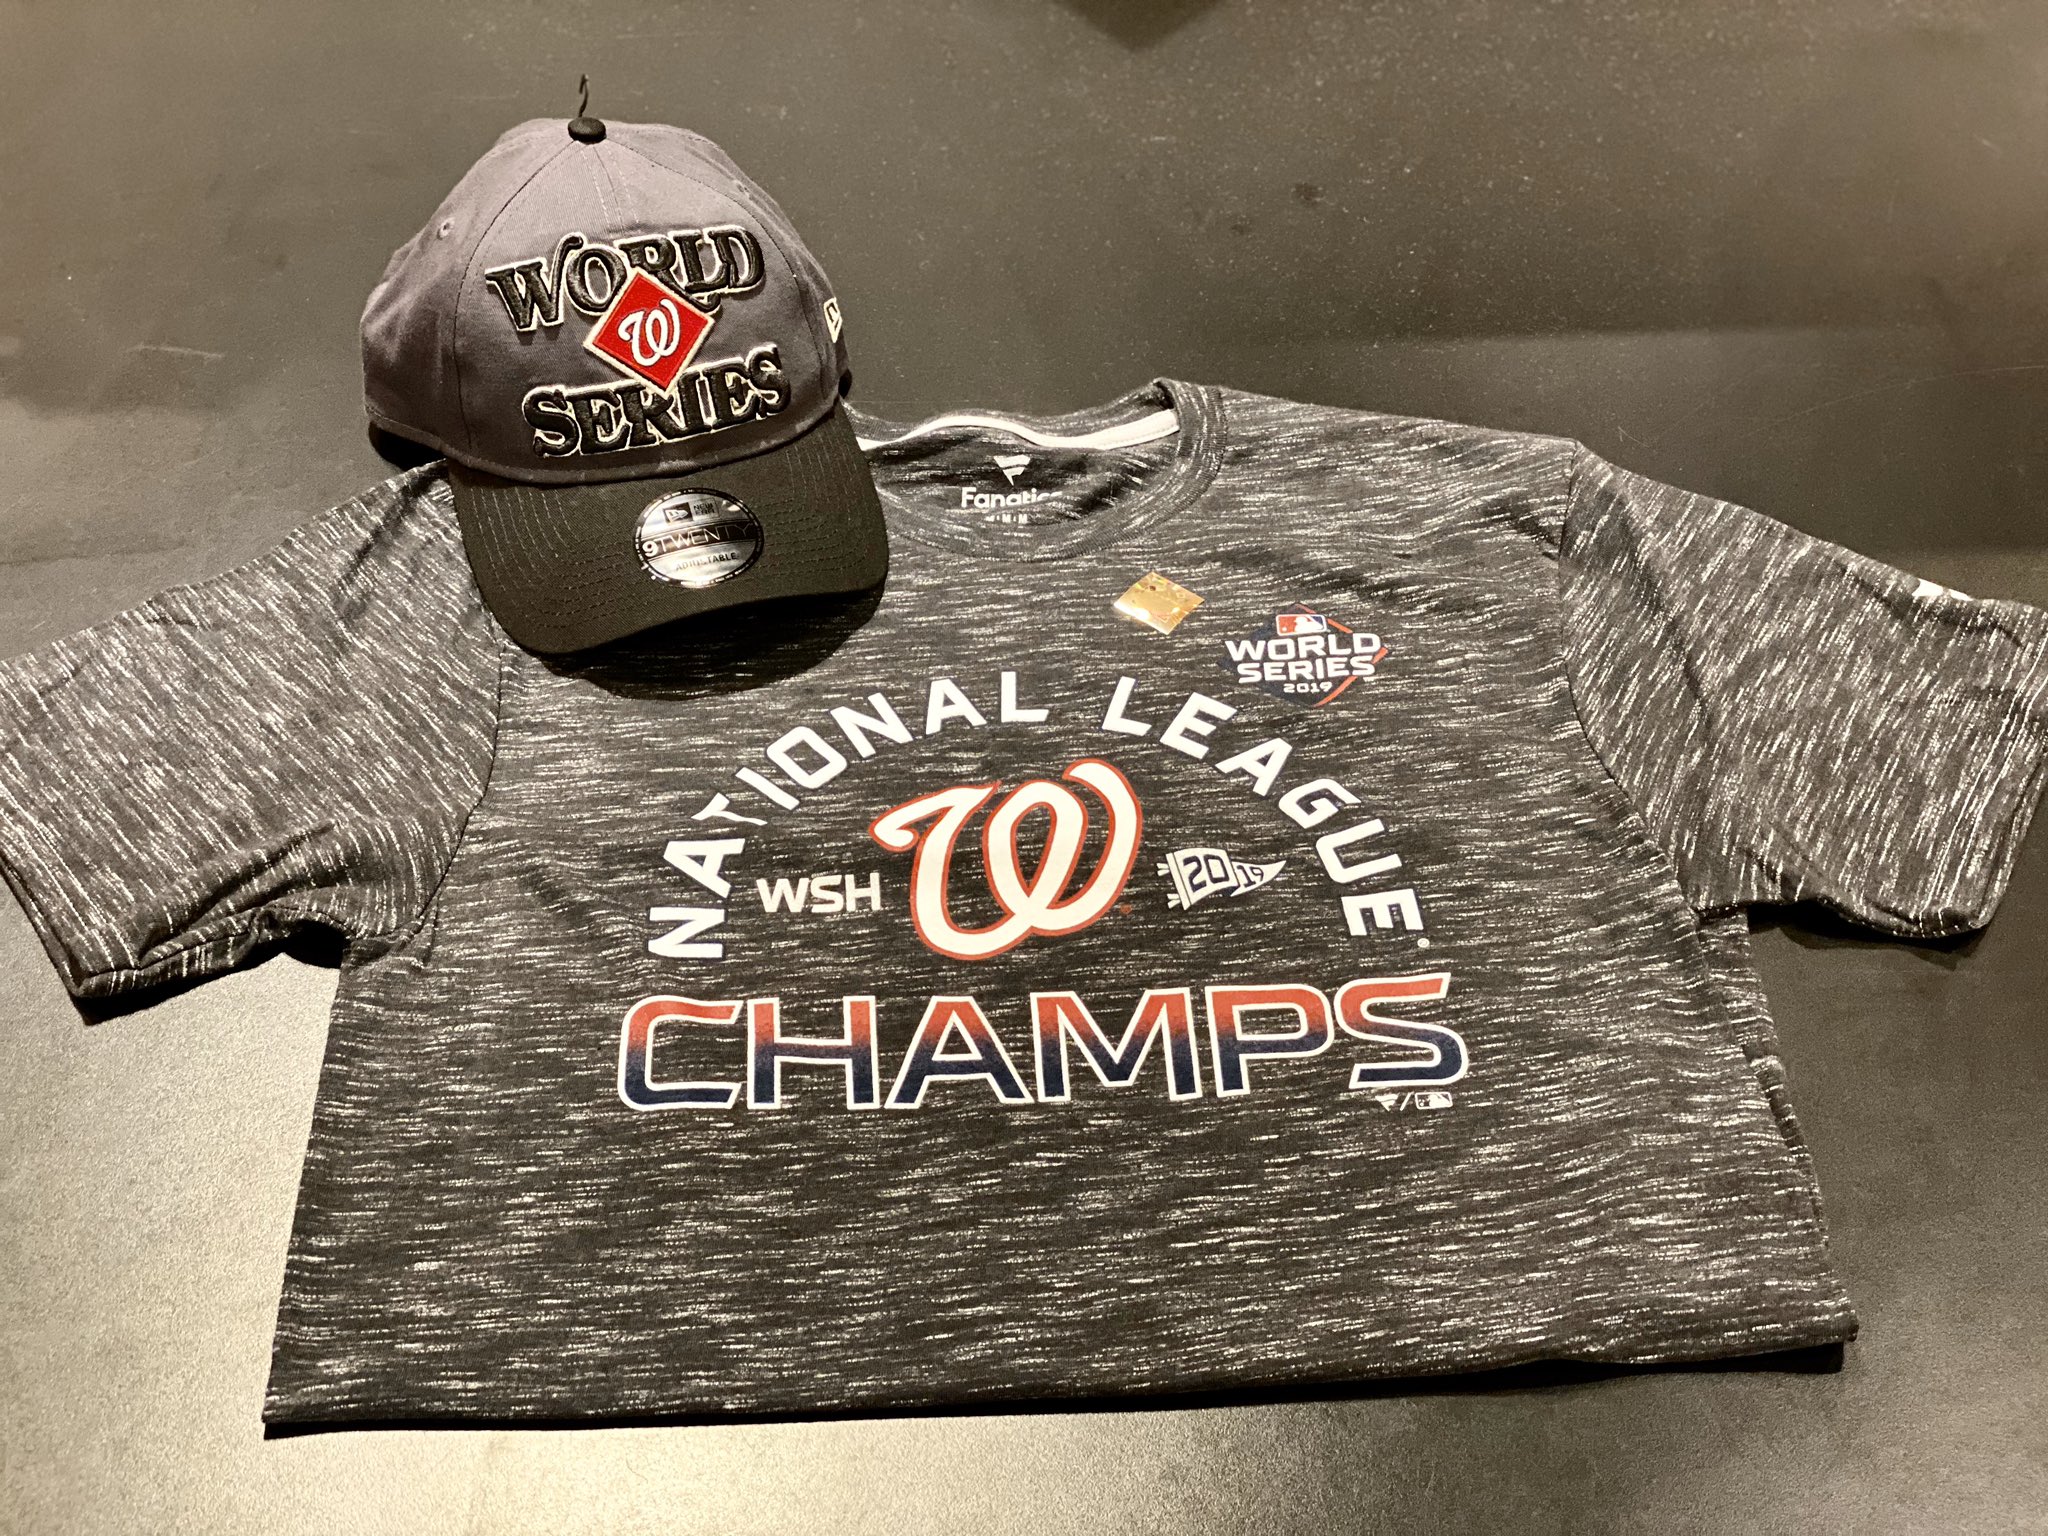 Official National league 2019 champions Washington Nationals shirt